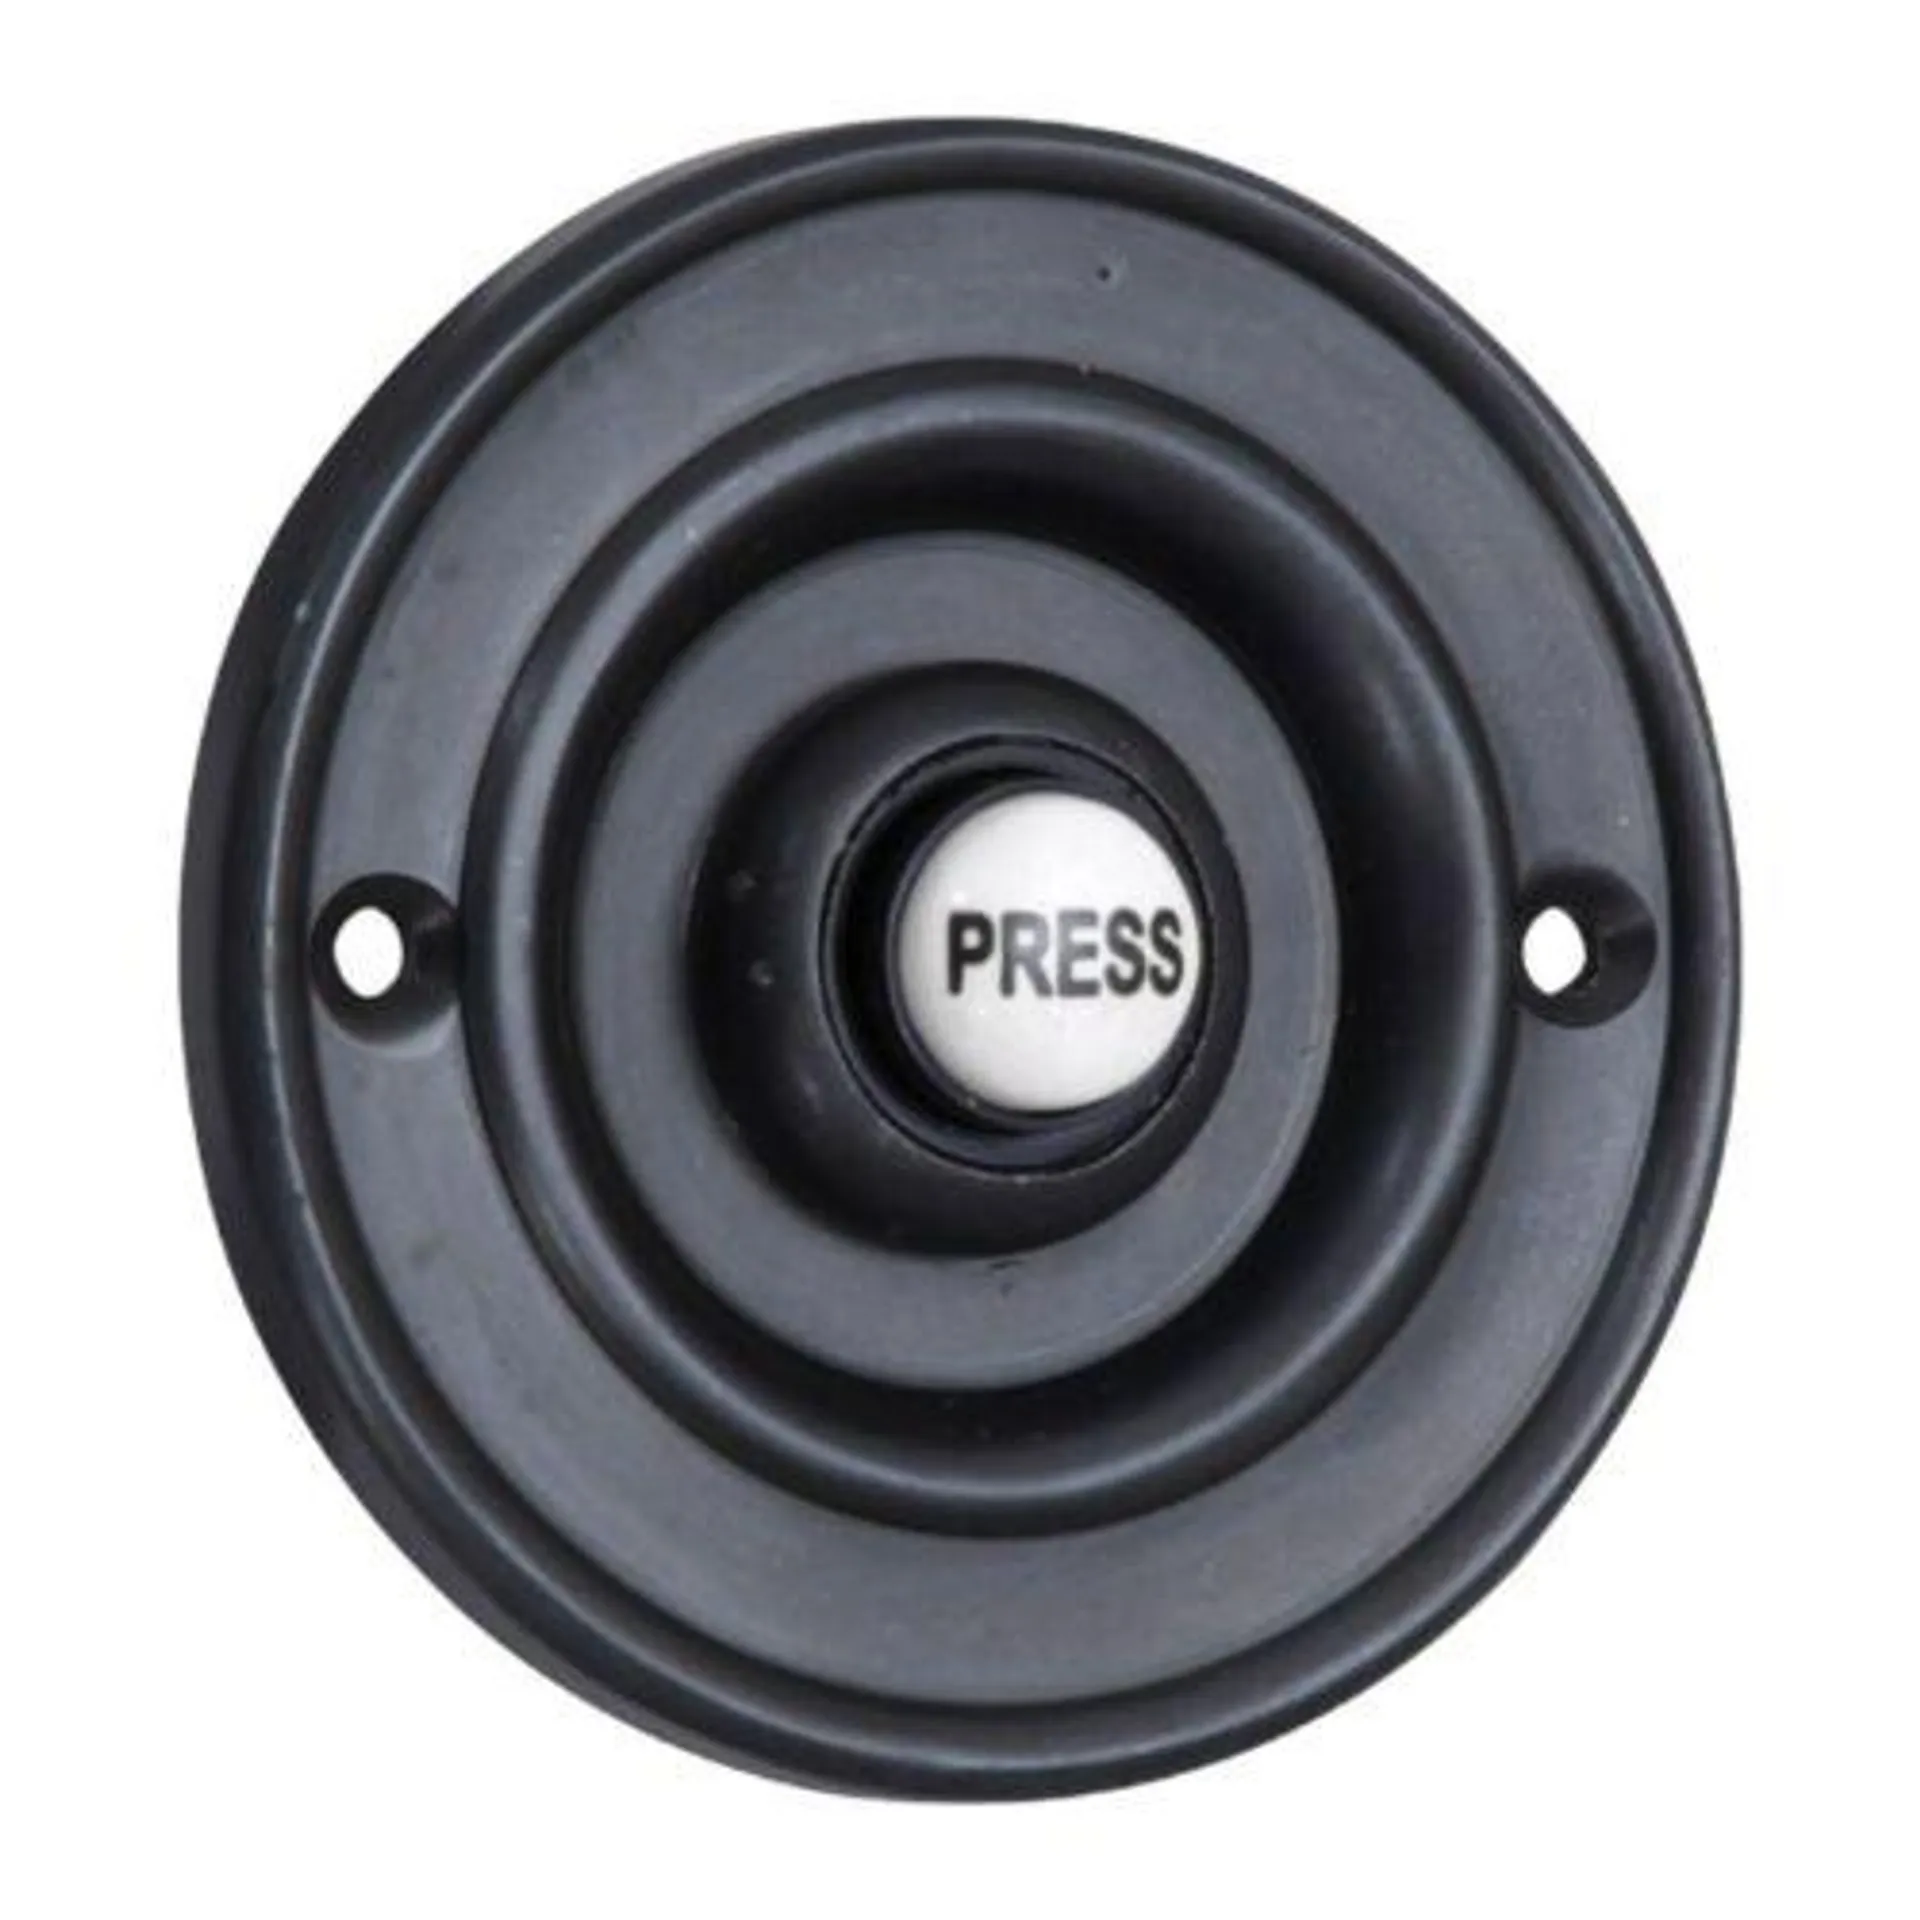 Circular Bell Push with China "Press" Button 76mm - Matt Black